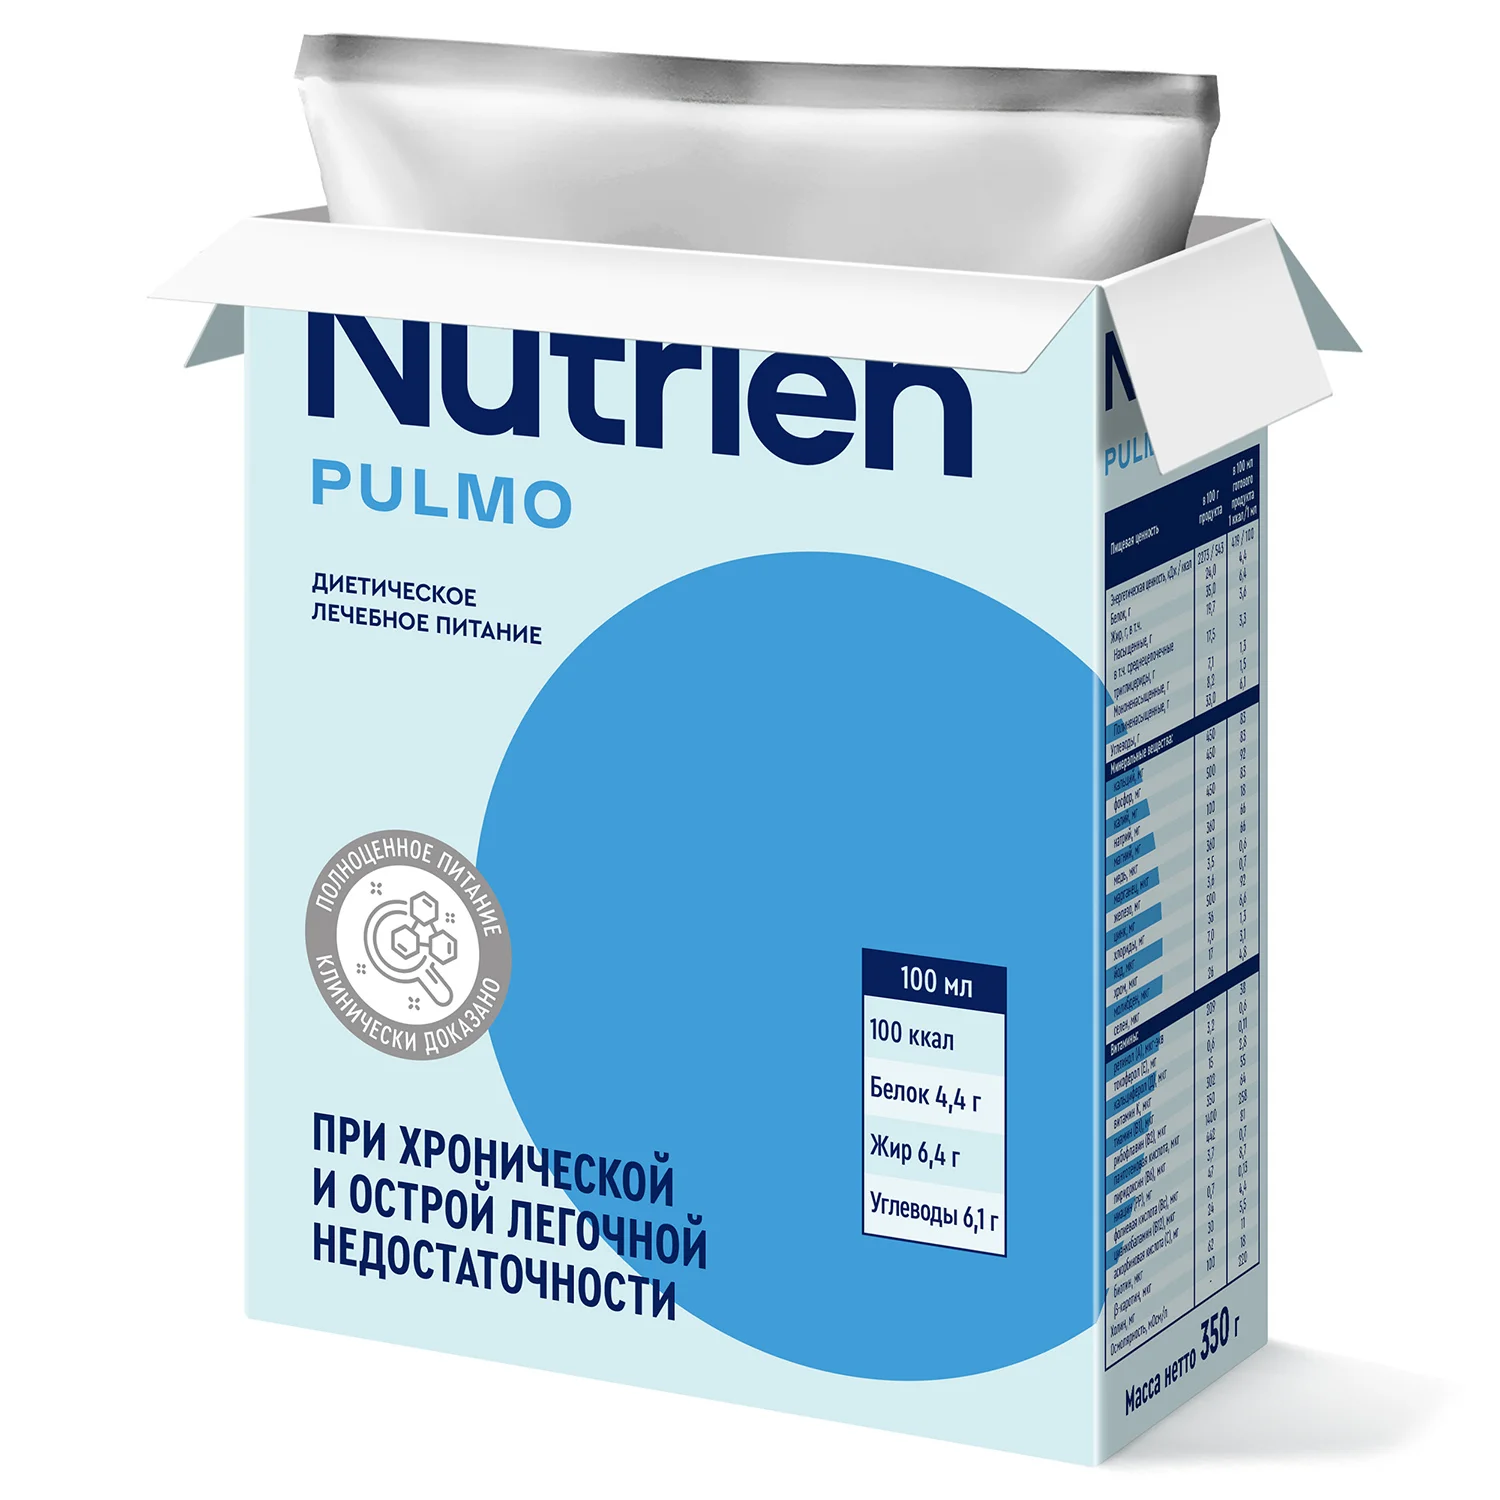 Nutrien Pulmo - 7